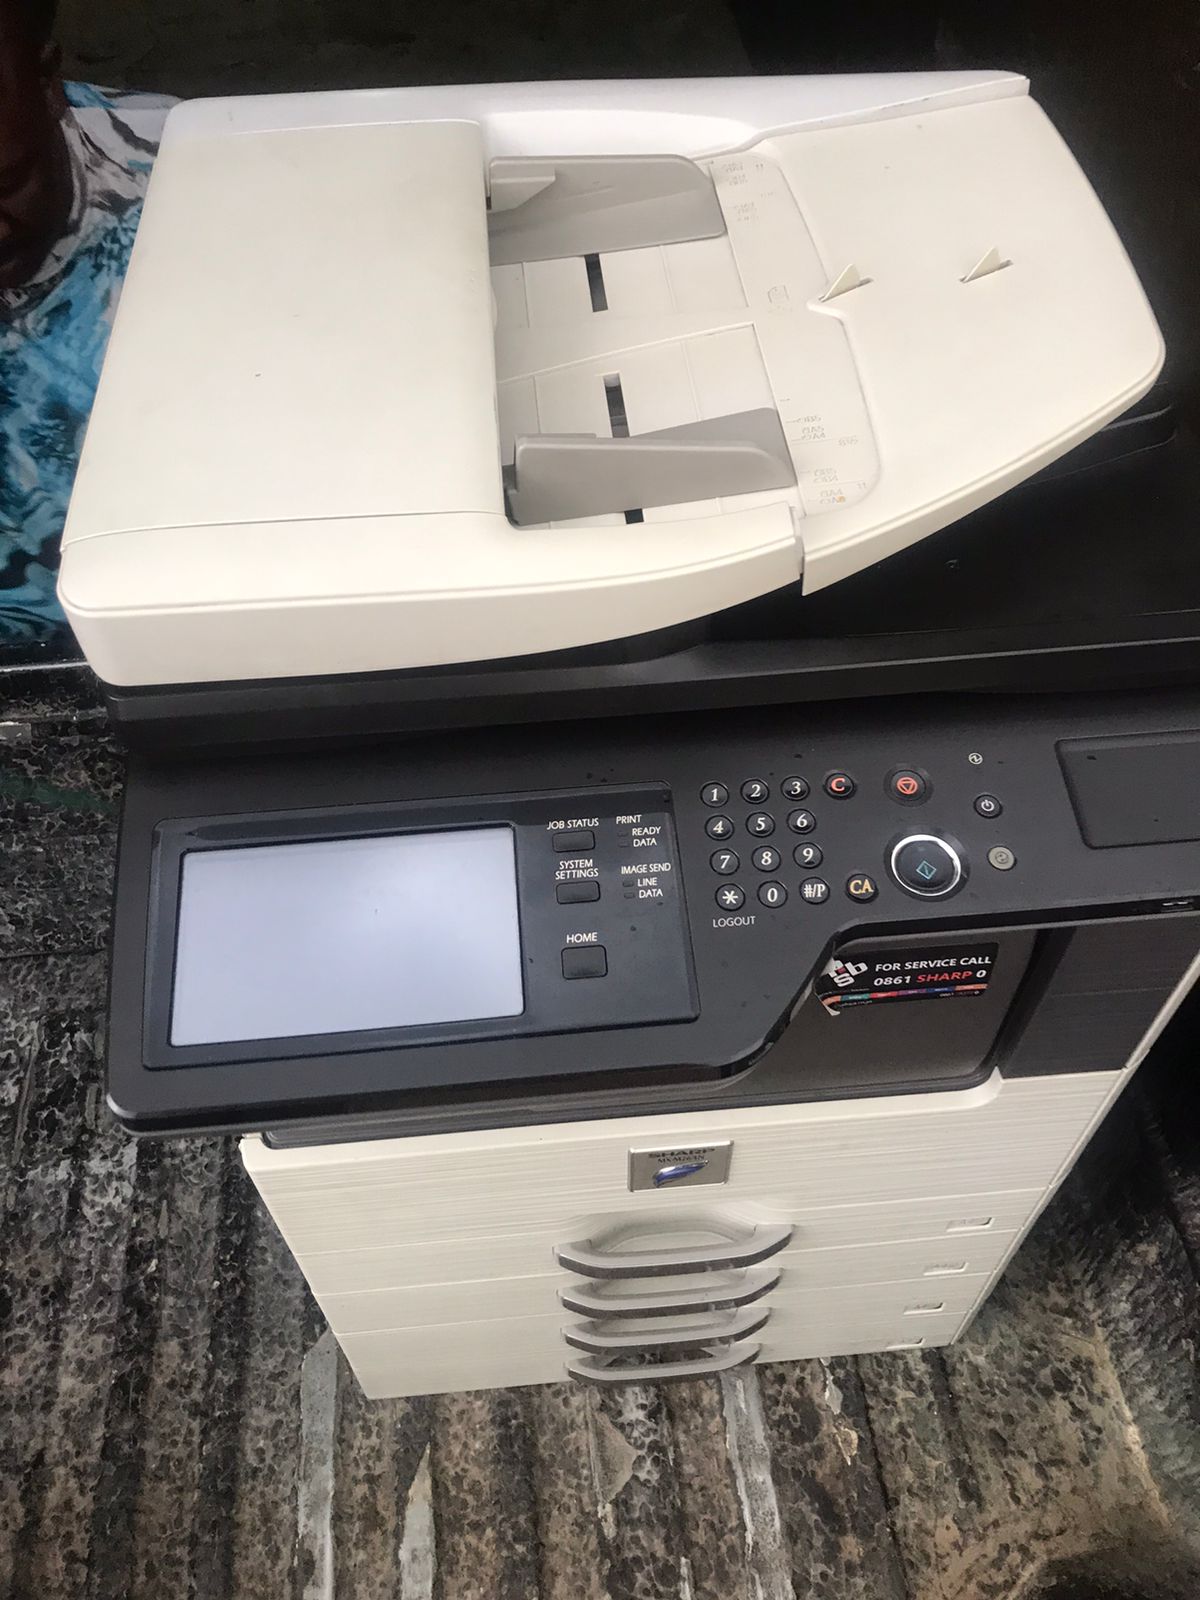 Sharp MX-M264N Multifunction Printer